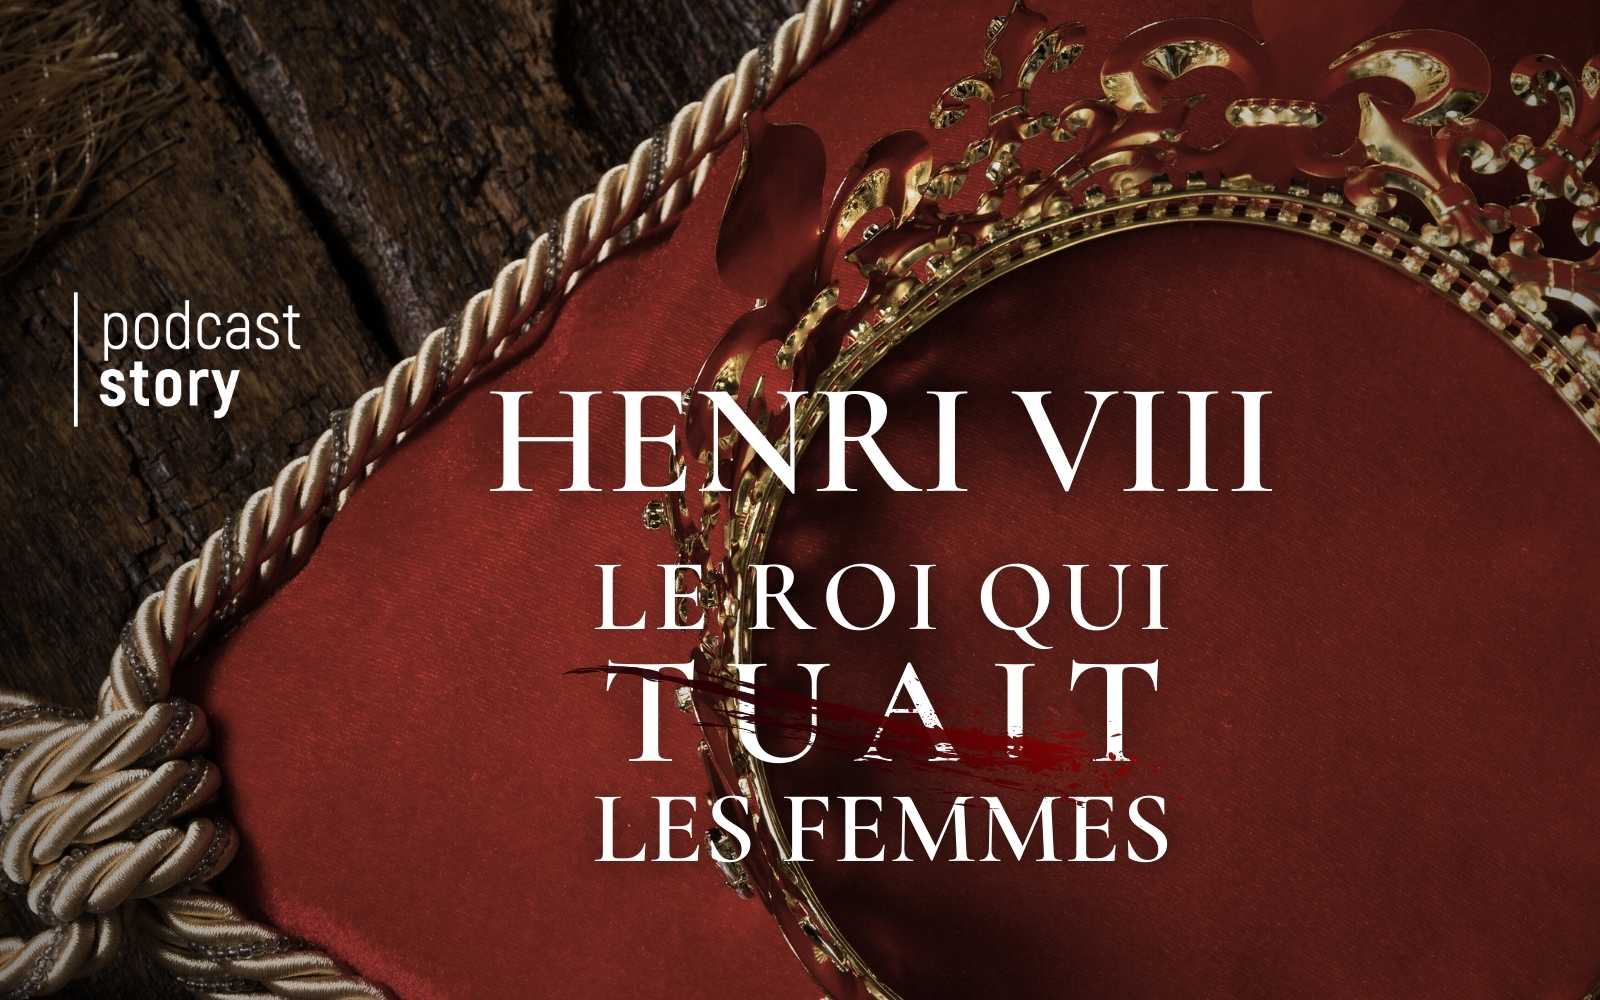 HENRI VIII : Le roi qui tuait les femmes